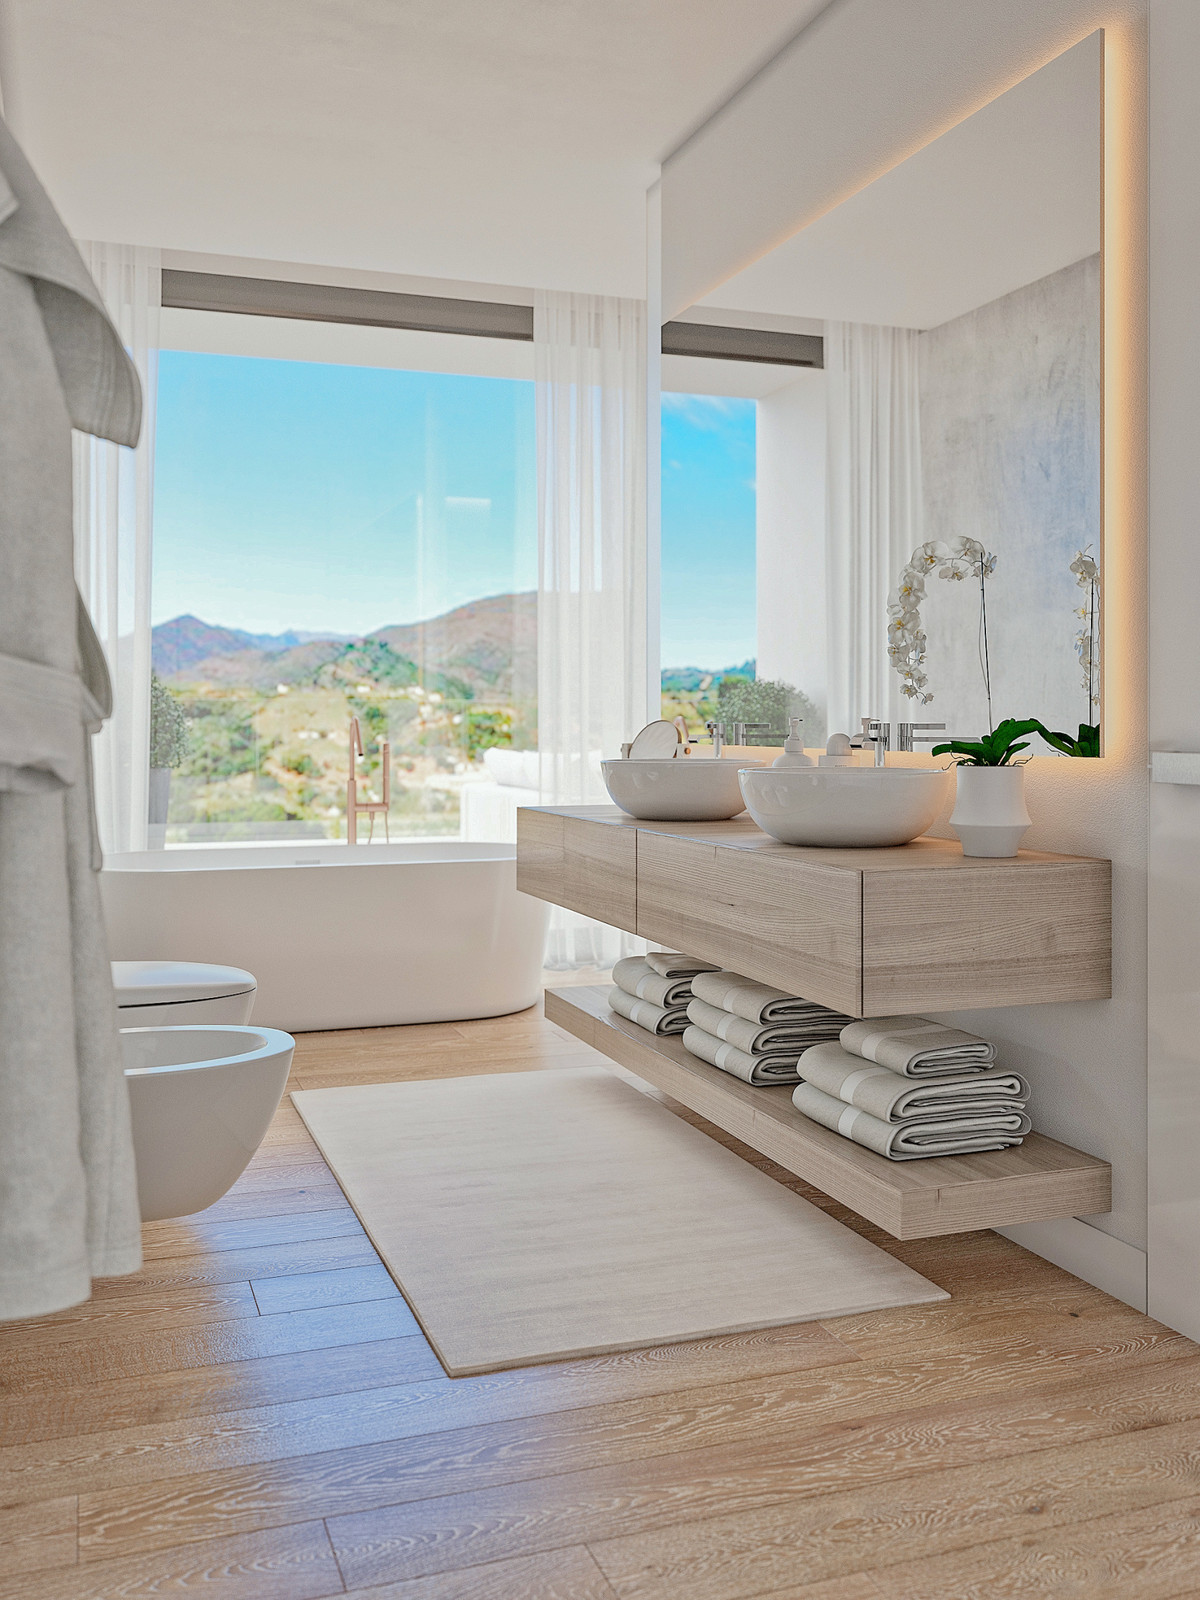 3 bedroom New Development For Sale in Mijas, Málaga - thumb 15